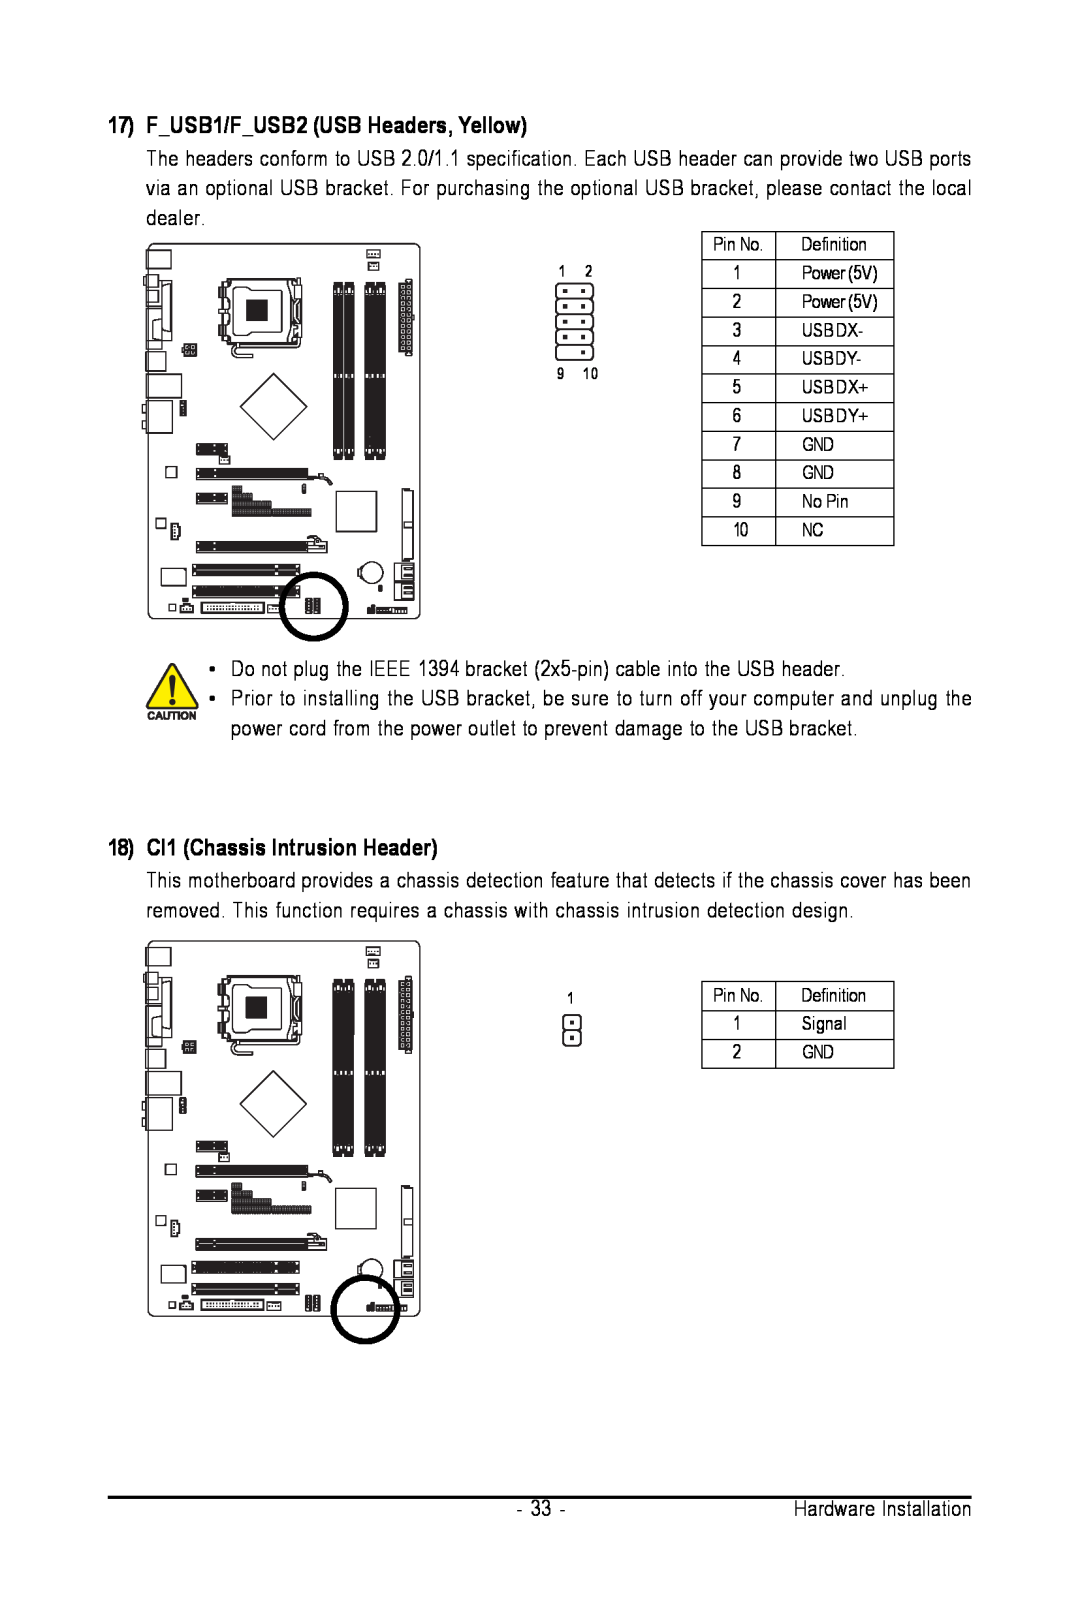 Intel GA-N650SLI-DS4L user manual FUSB1/FUSB2 USB Headers, Yellow, 18 CI1 Chassis Intrusion Header 